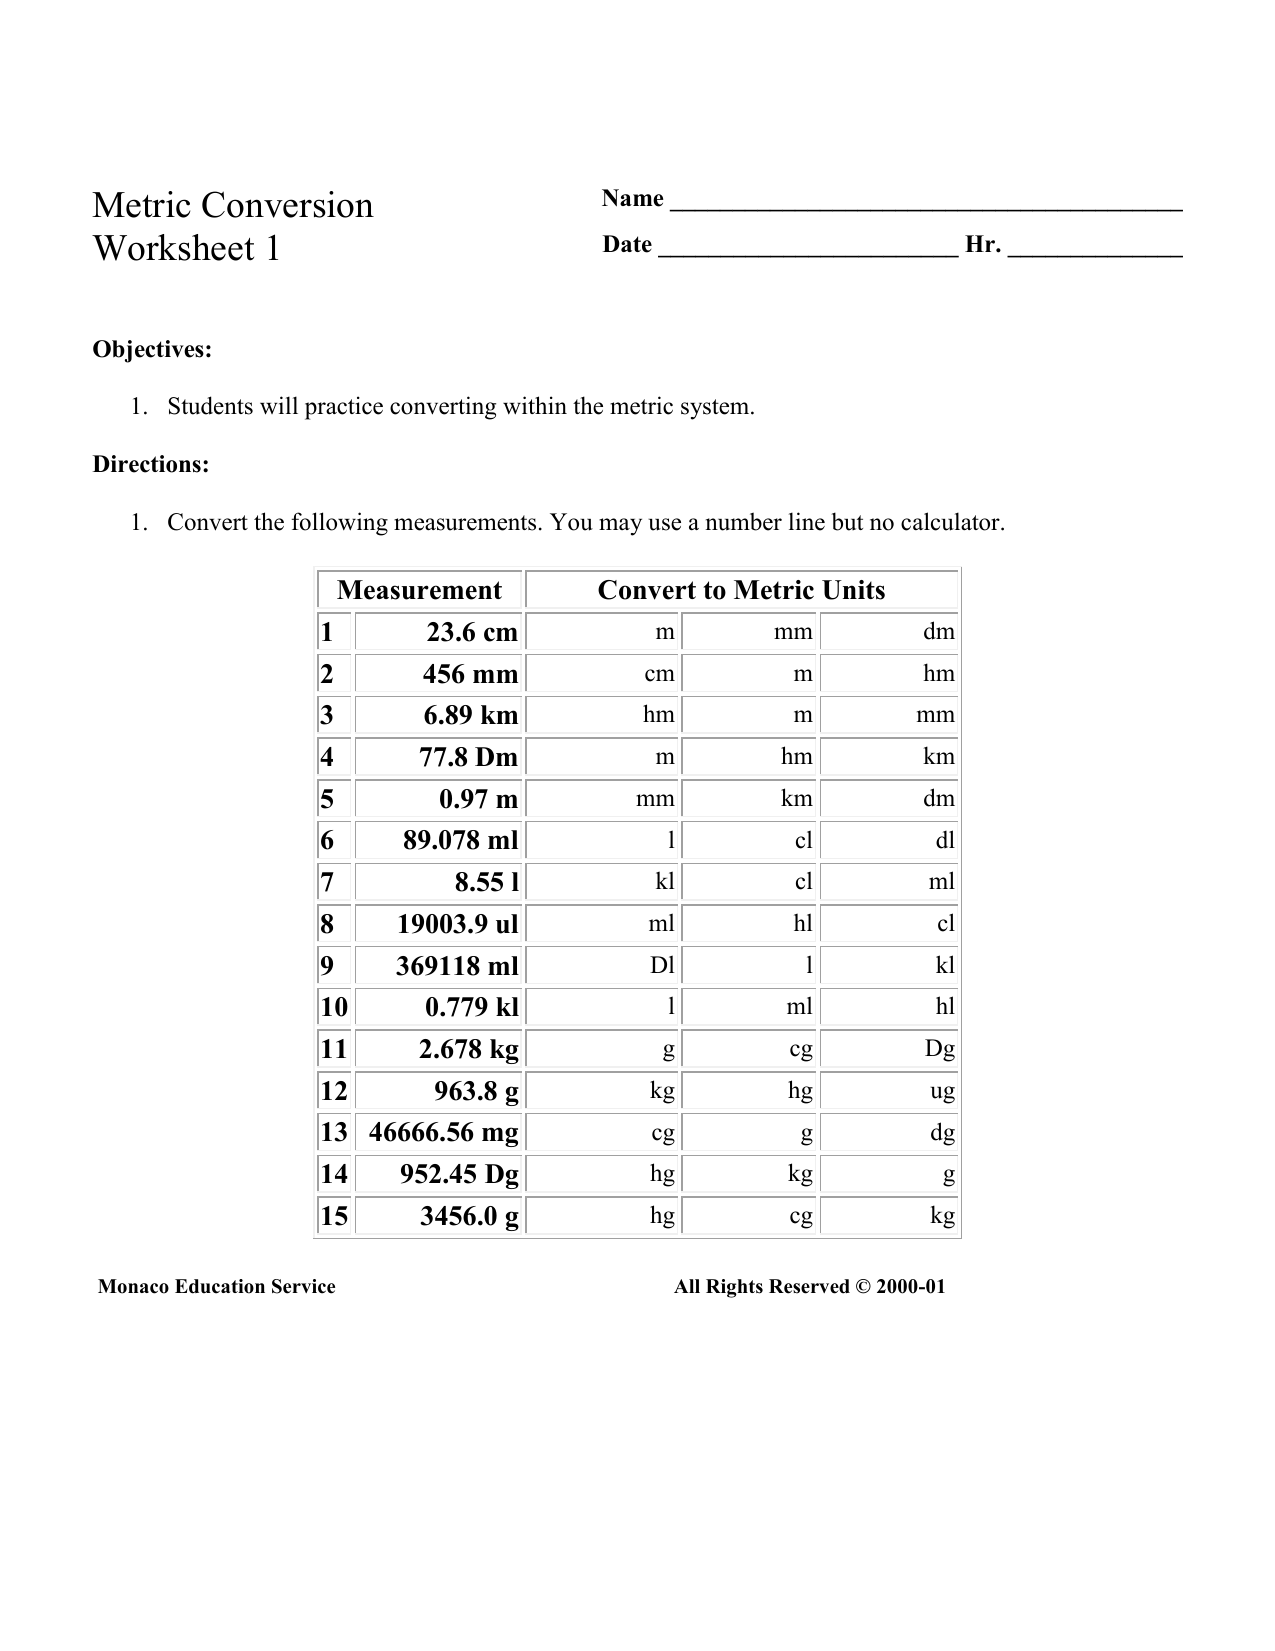 metric conversions and practice In Metric Conversion Worksheet 1